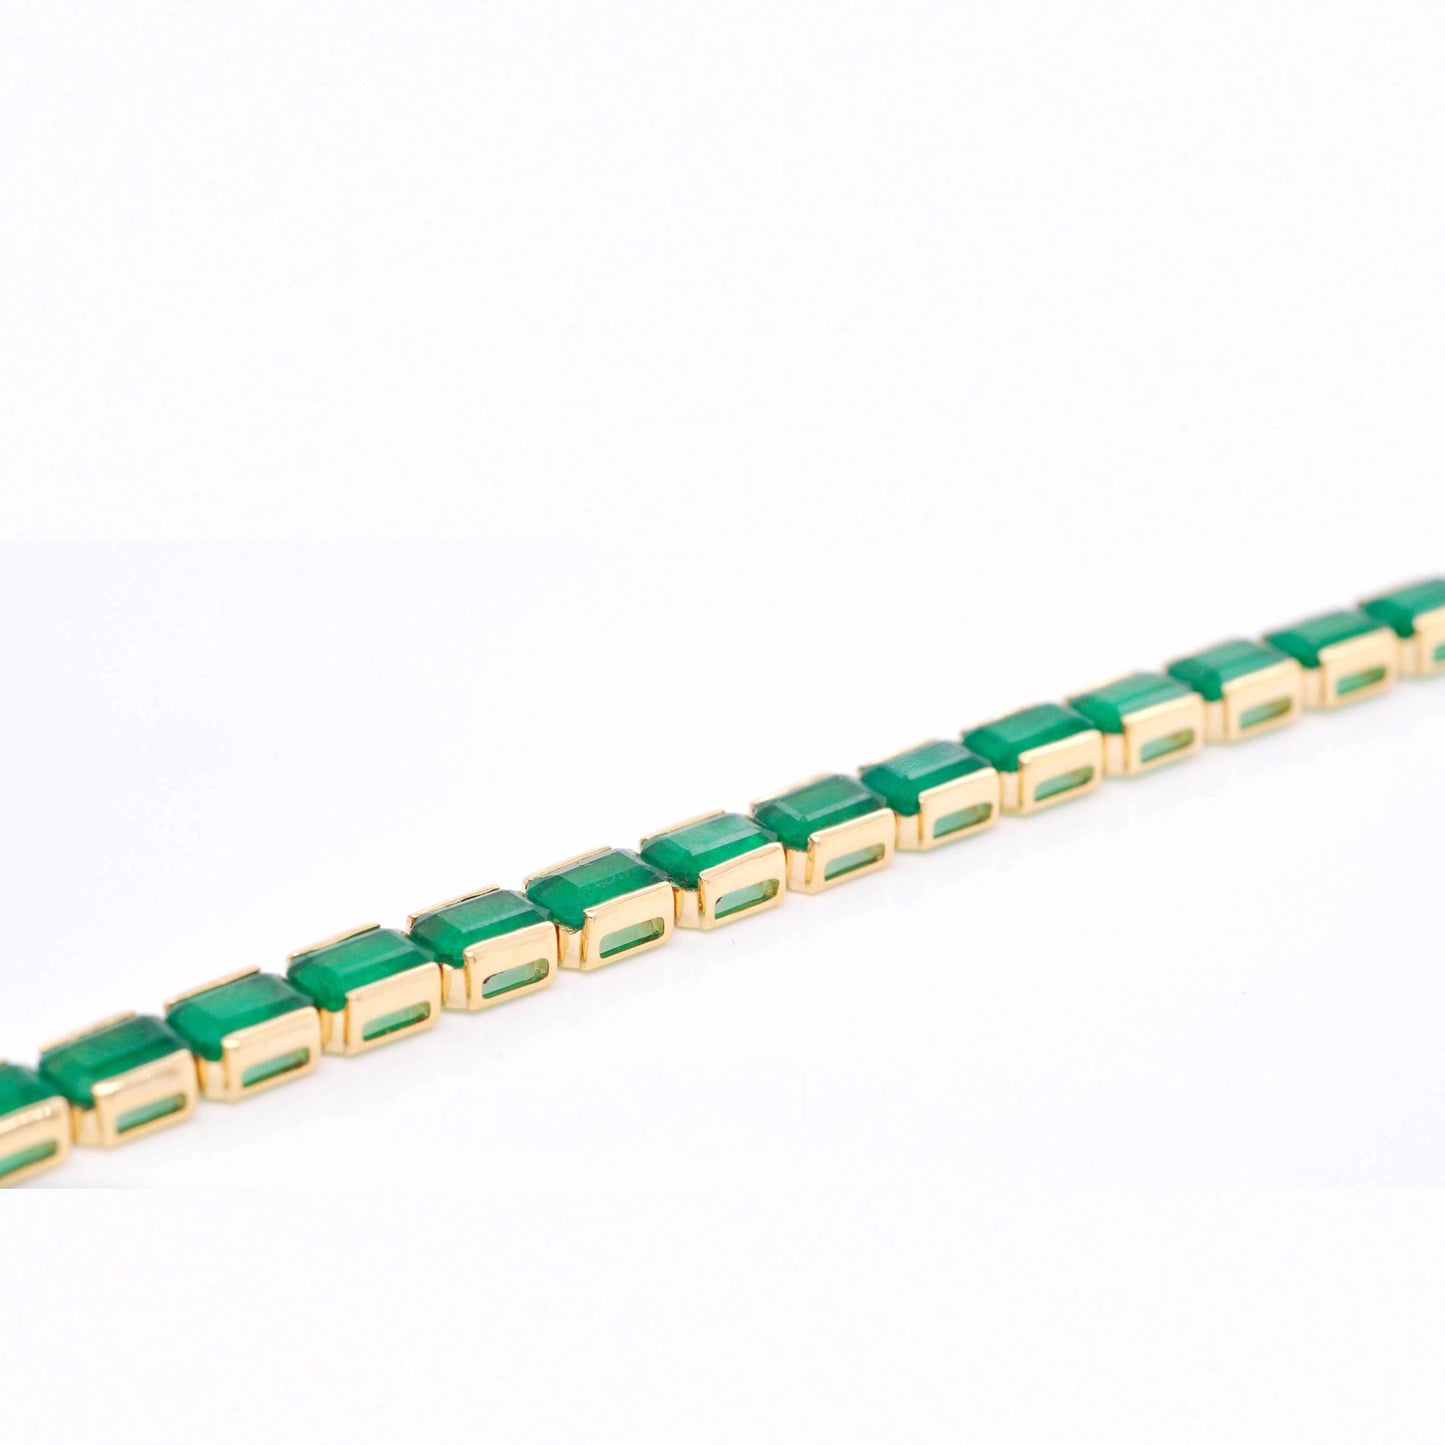 Emerald Stone Bracelet